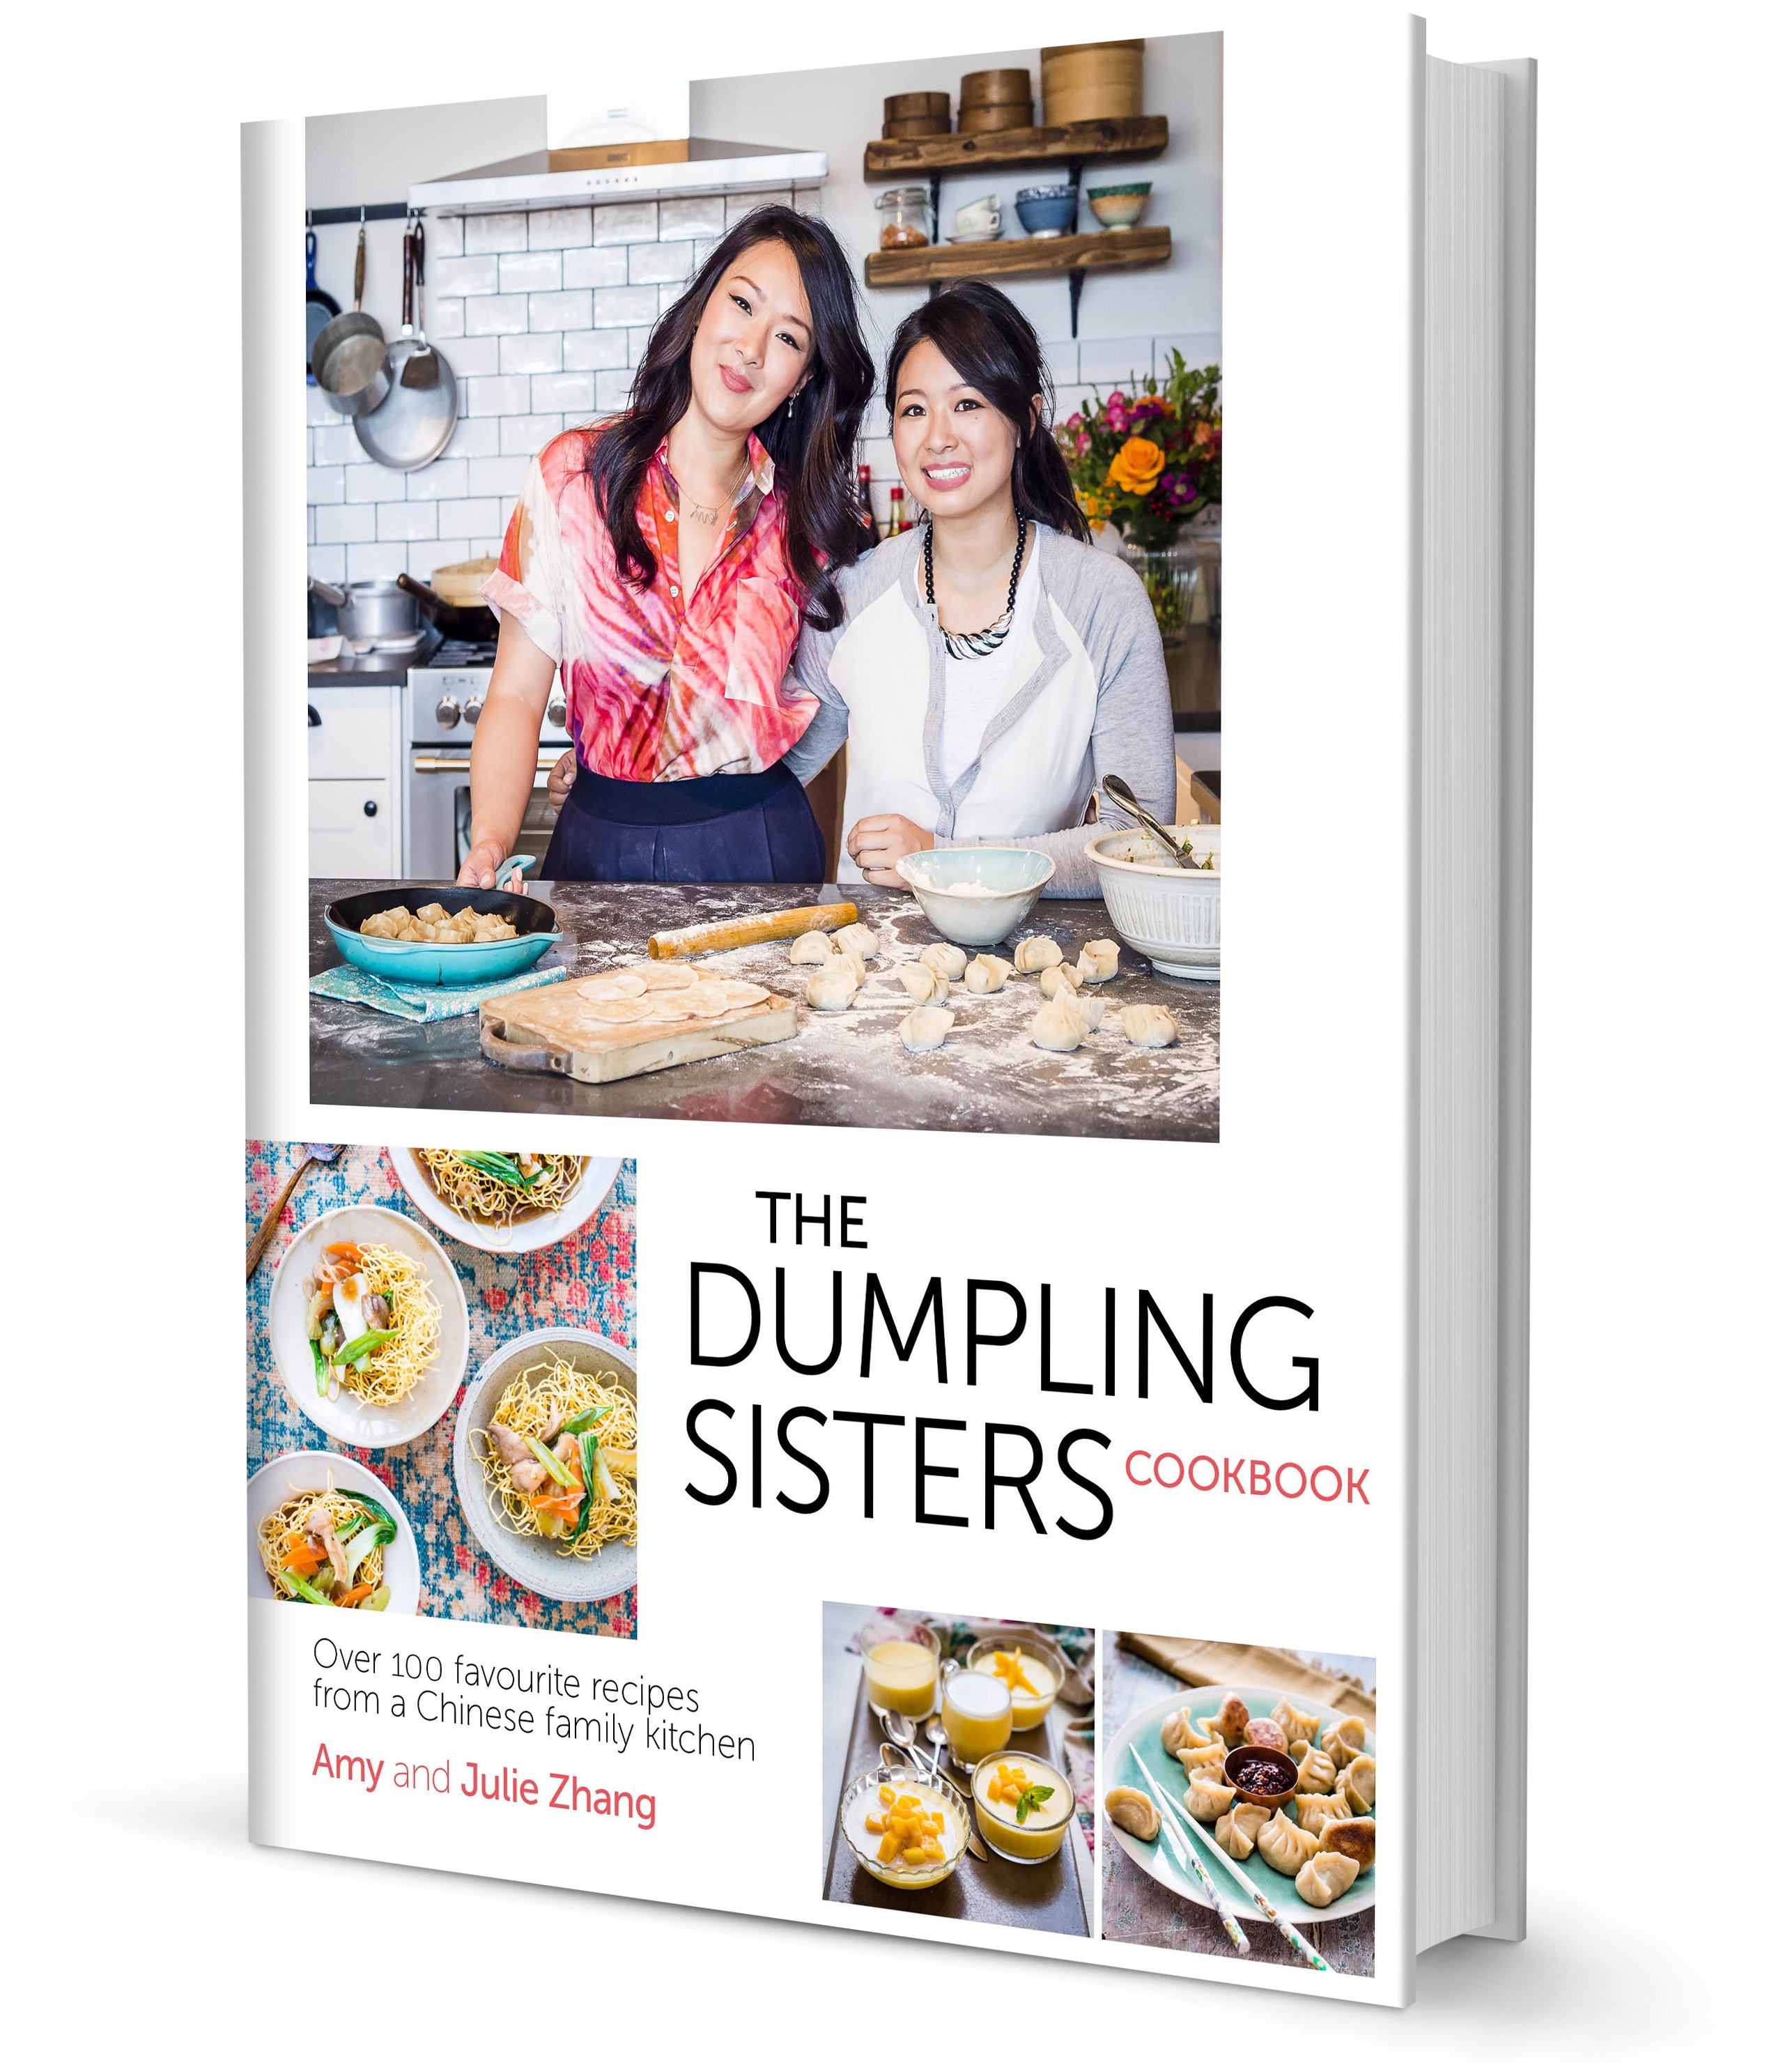 Get The Dumpling Sisters Cookbook here